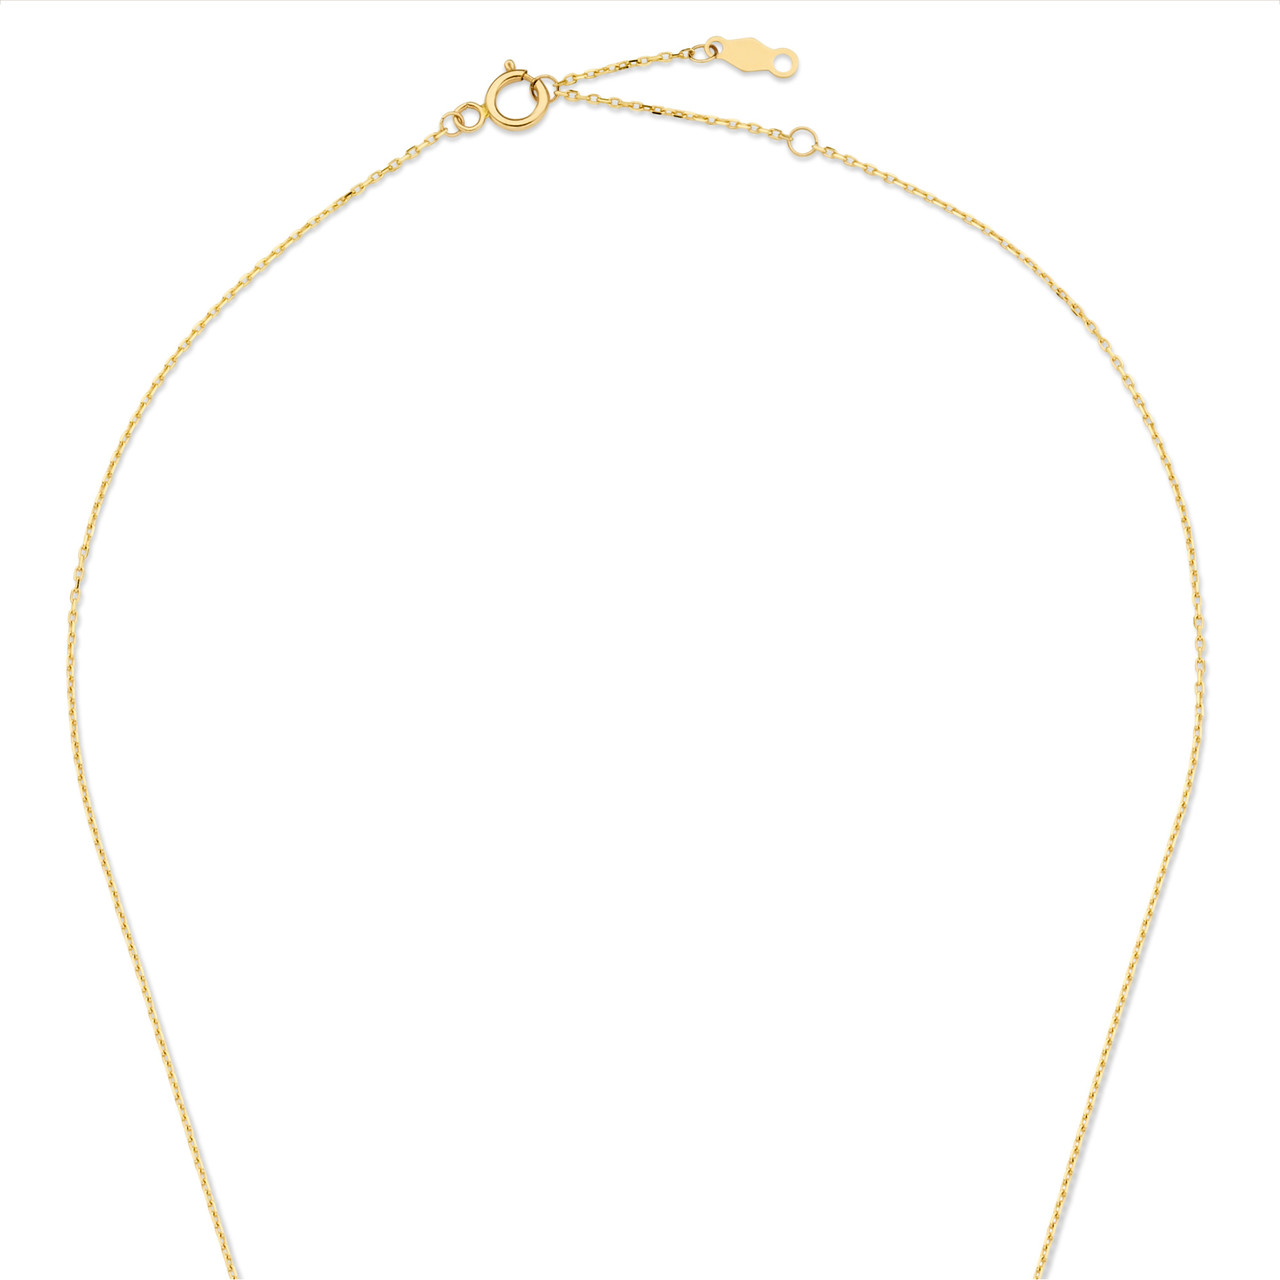 Isabel Bernard - IB340138 necklace 14 gold karat